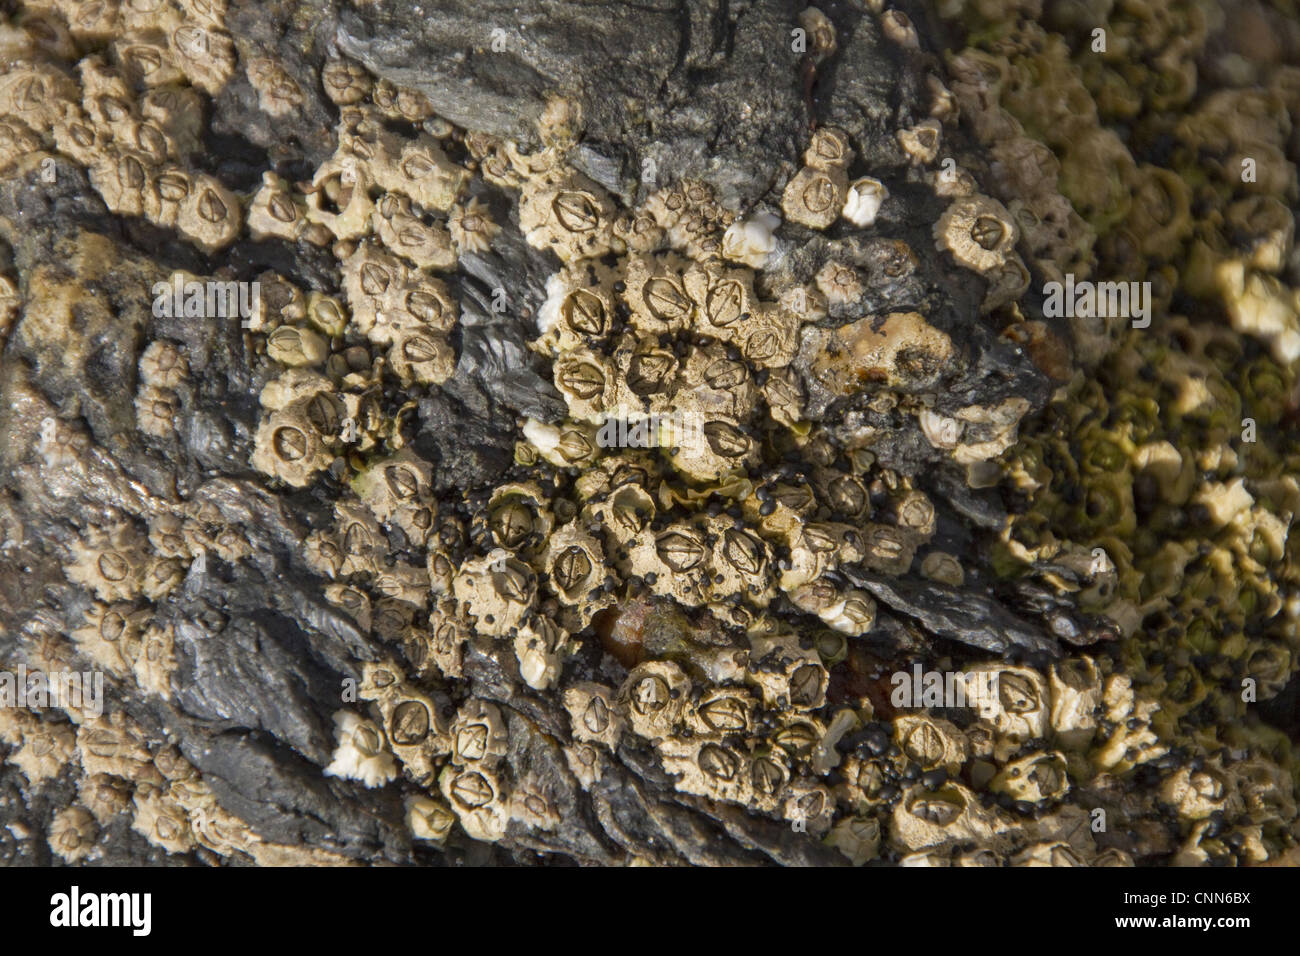 Semibalanus balanoides common widespread boreo-arctic species acorn barnacle common rocks other substrates intertidal zone Stock Photo